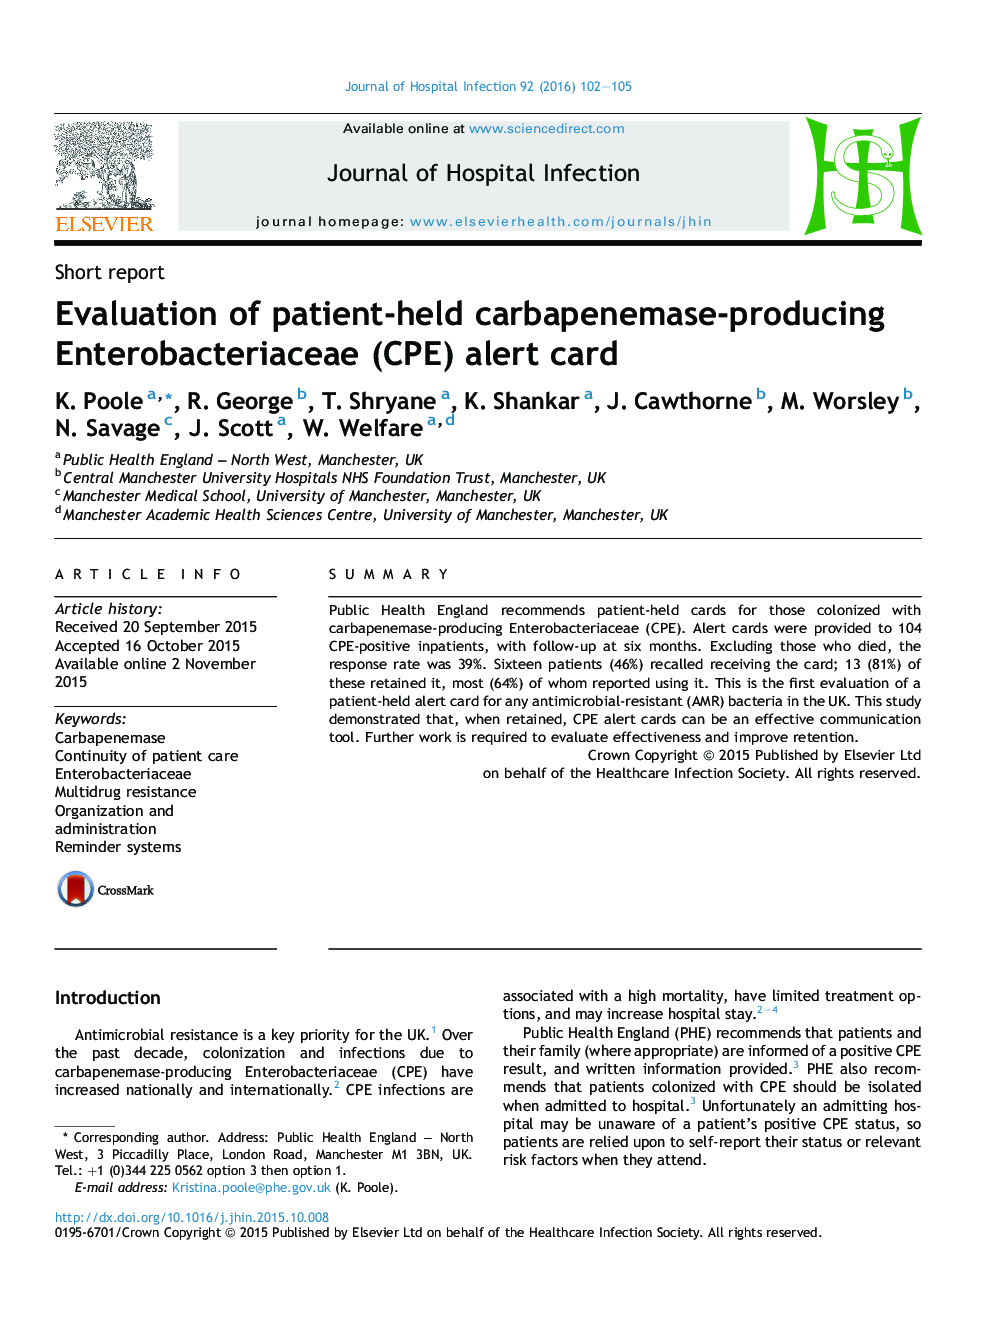 Evaluation of patient-held carbapenemase-producing Enterobacteriaceae (CPE) alert card